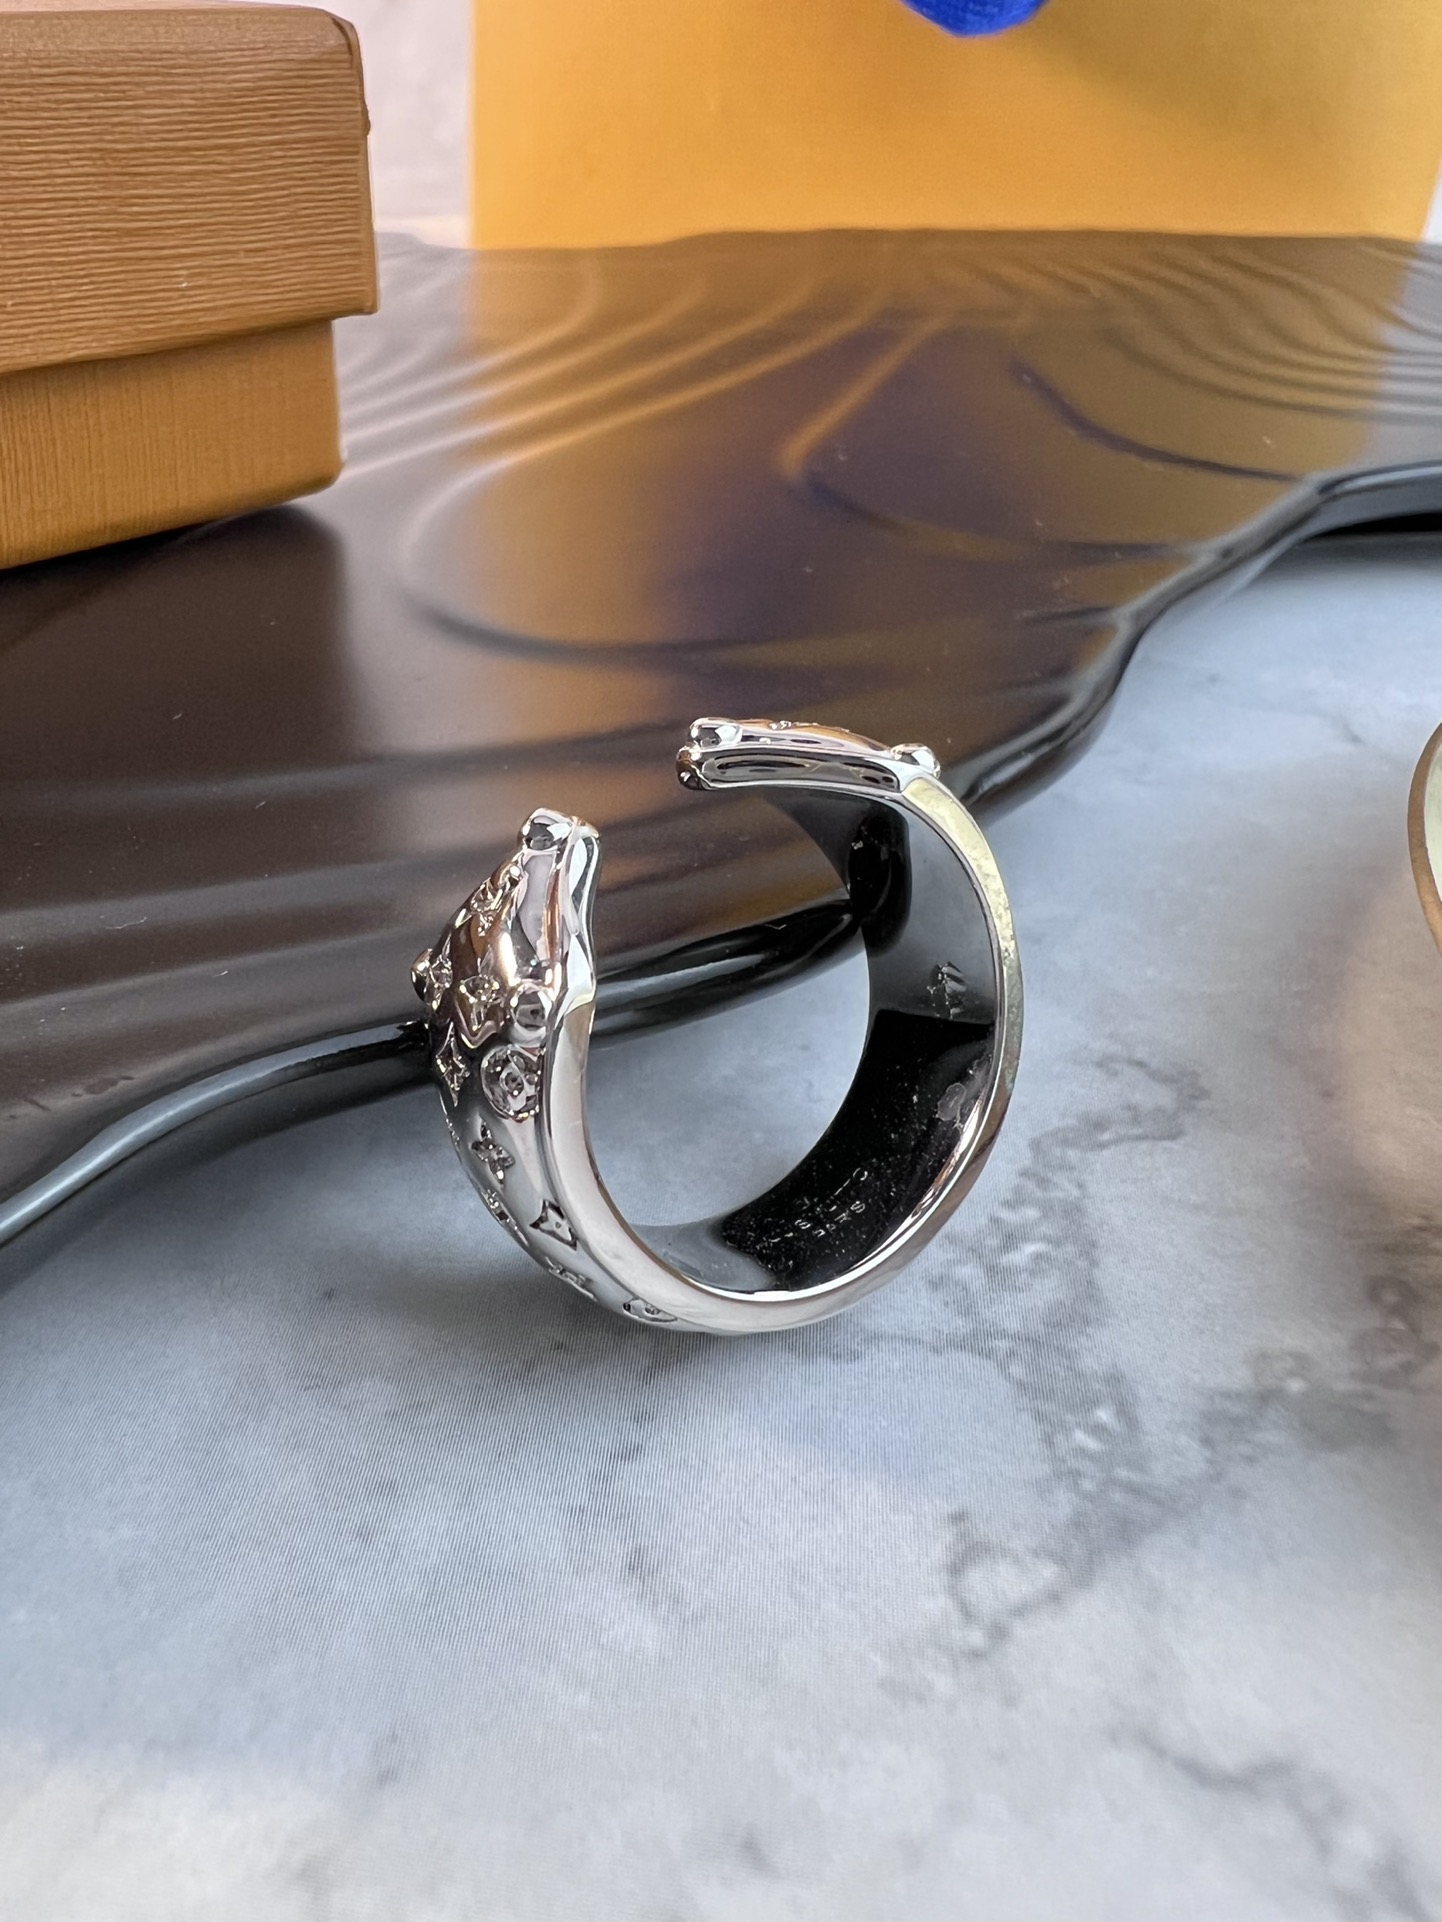 LV戒指本款Nanogram耳环为抛光金属环镂刻Monogram图案致意品牌传承的同时见证精湛工艺